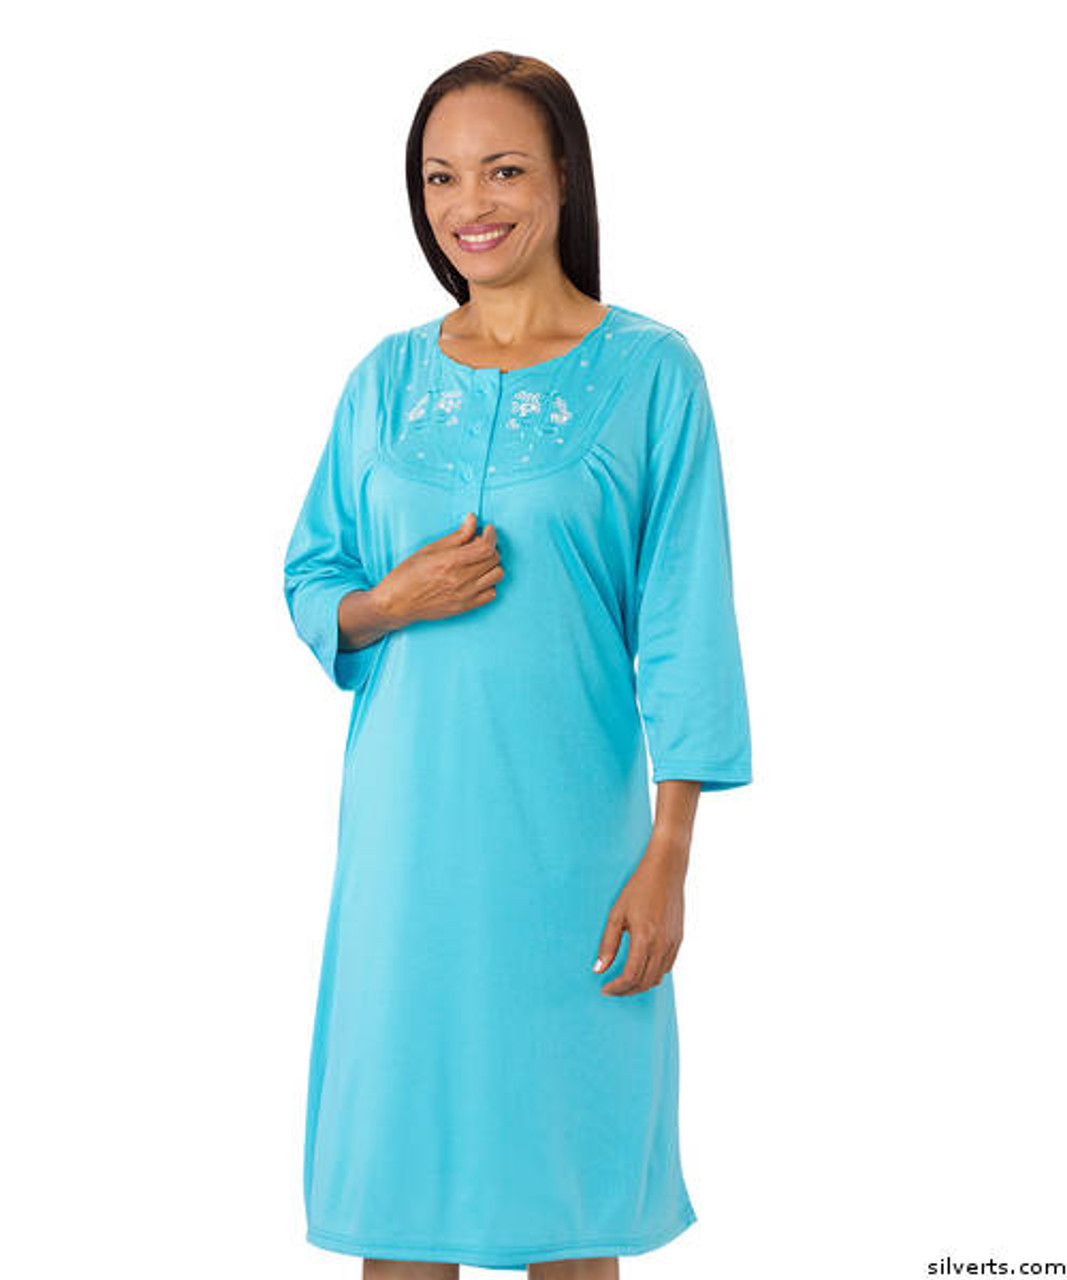 Silvert's 261700601 Women's Cotton Knit Pretty Hospital Gown , Size Small, GULF STREAM